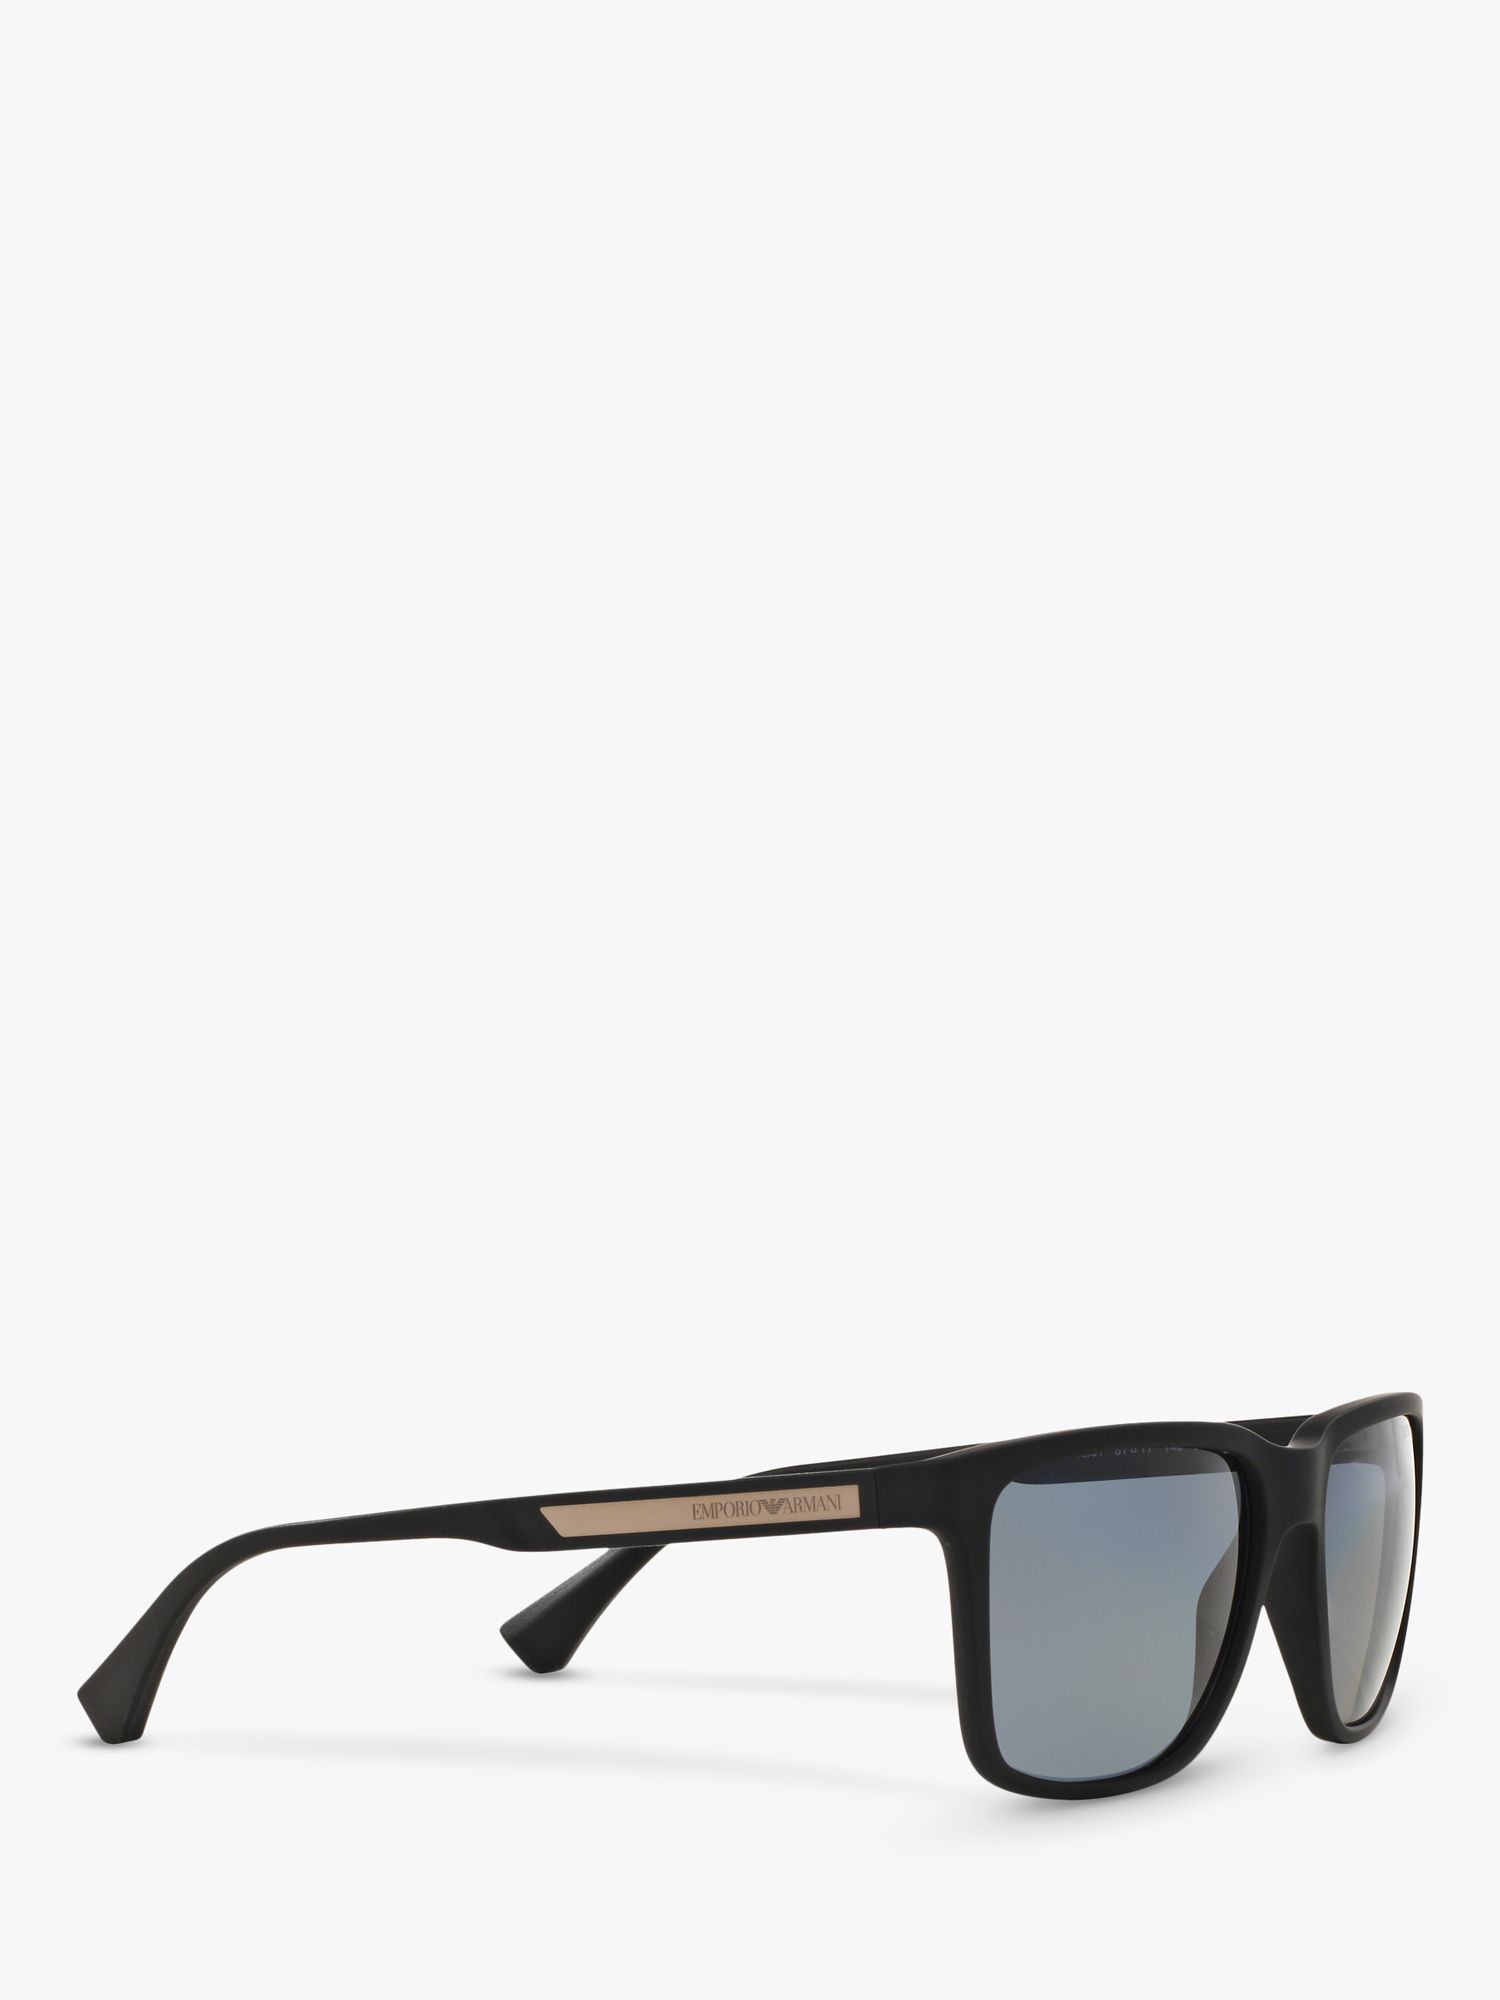 Emporio Armani EA4047 Men's Square Polarised Sunglasses, Rubber Black/Grey  at John Lewis u0026 Partners